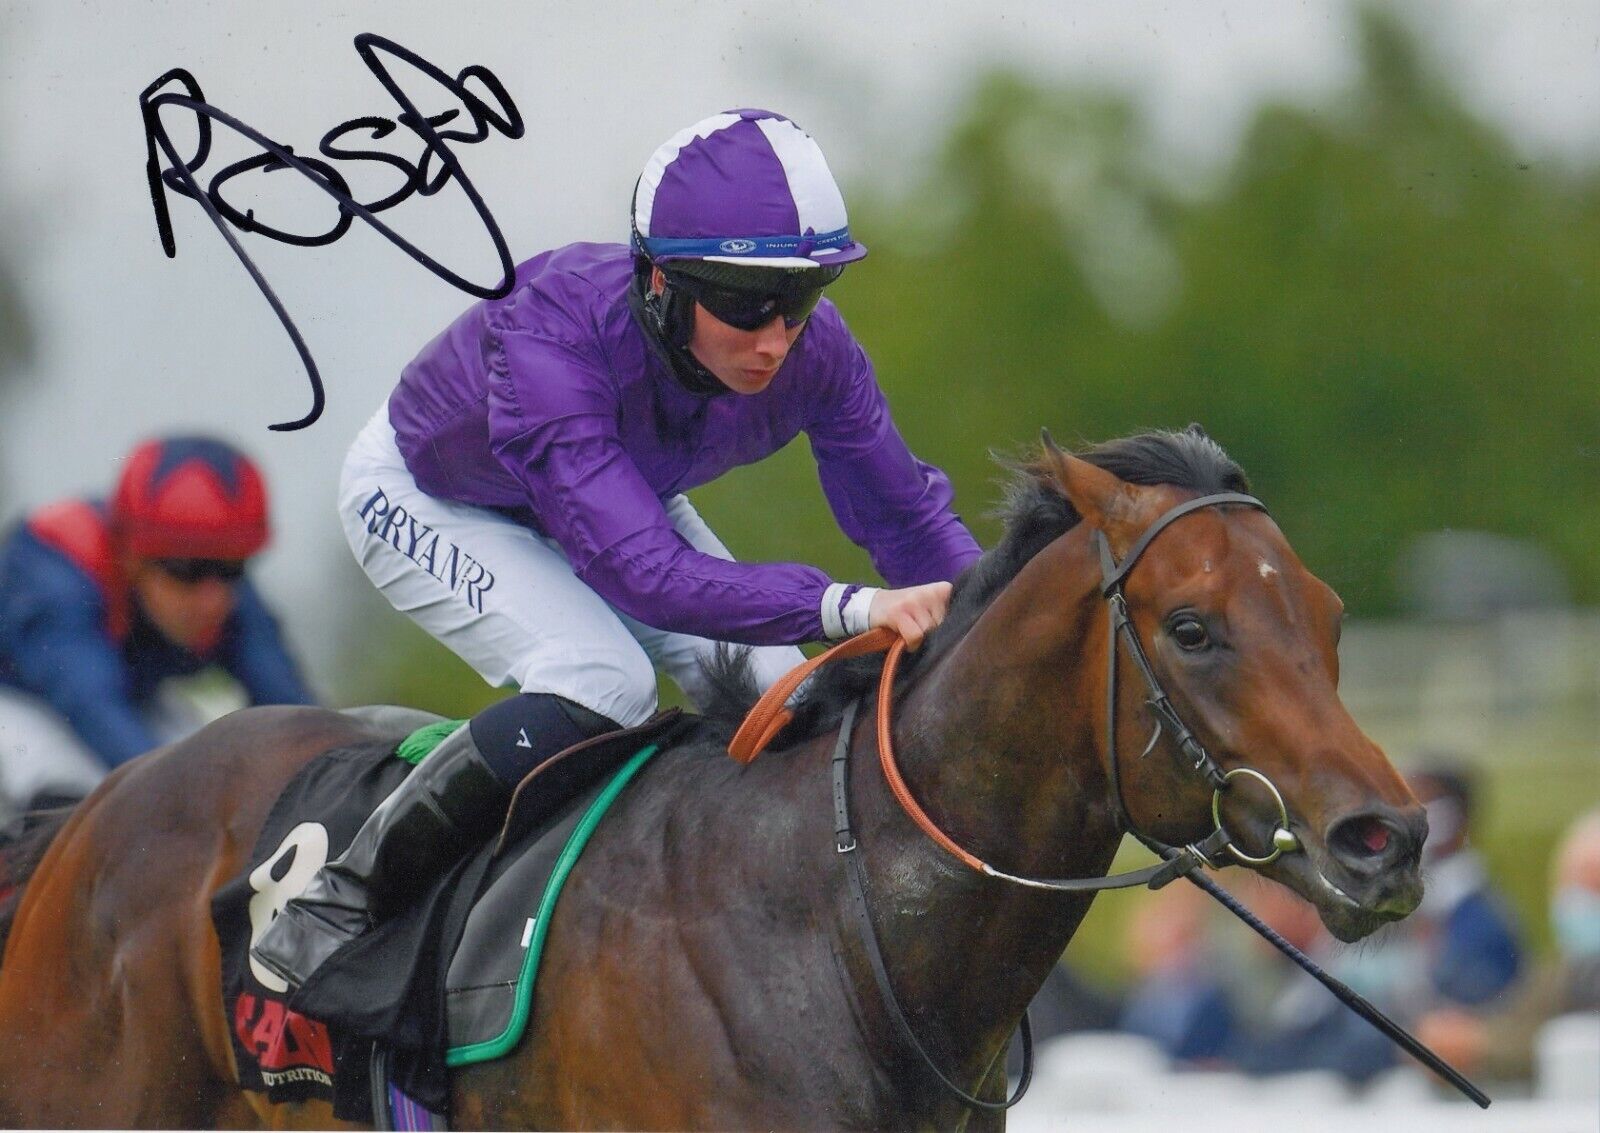 Horse Racing - Rossa Ryan - Signed 12x8 Photograph - COA 